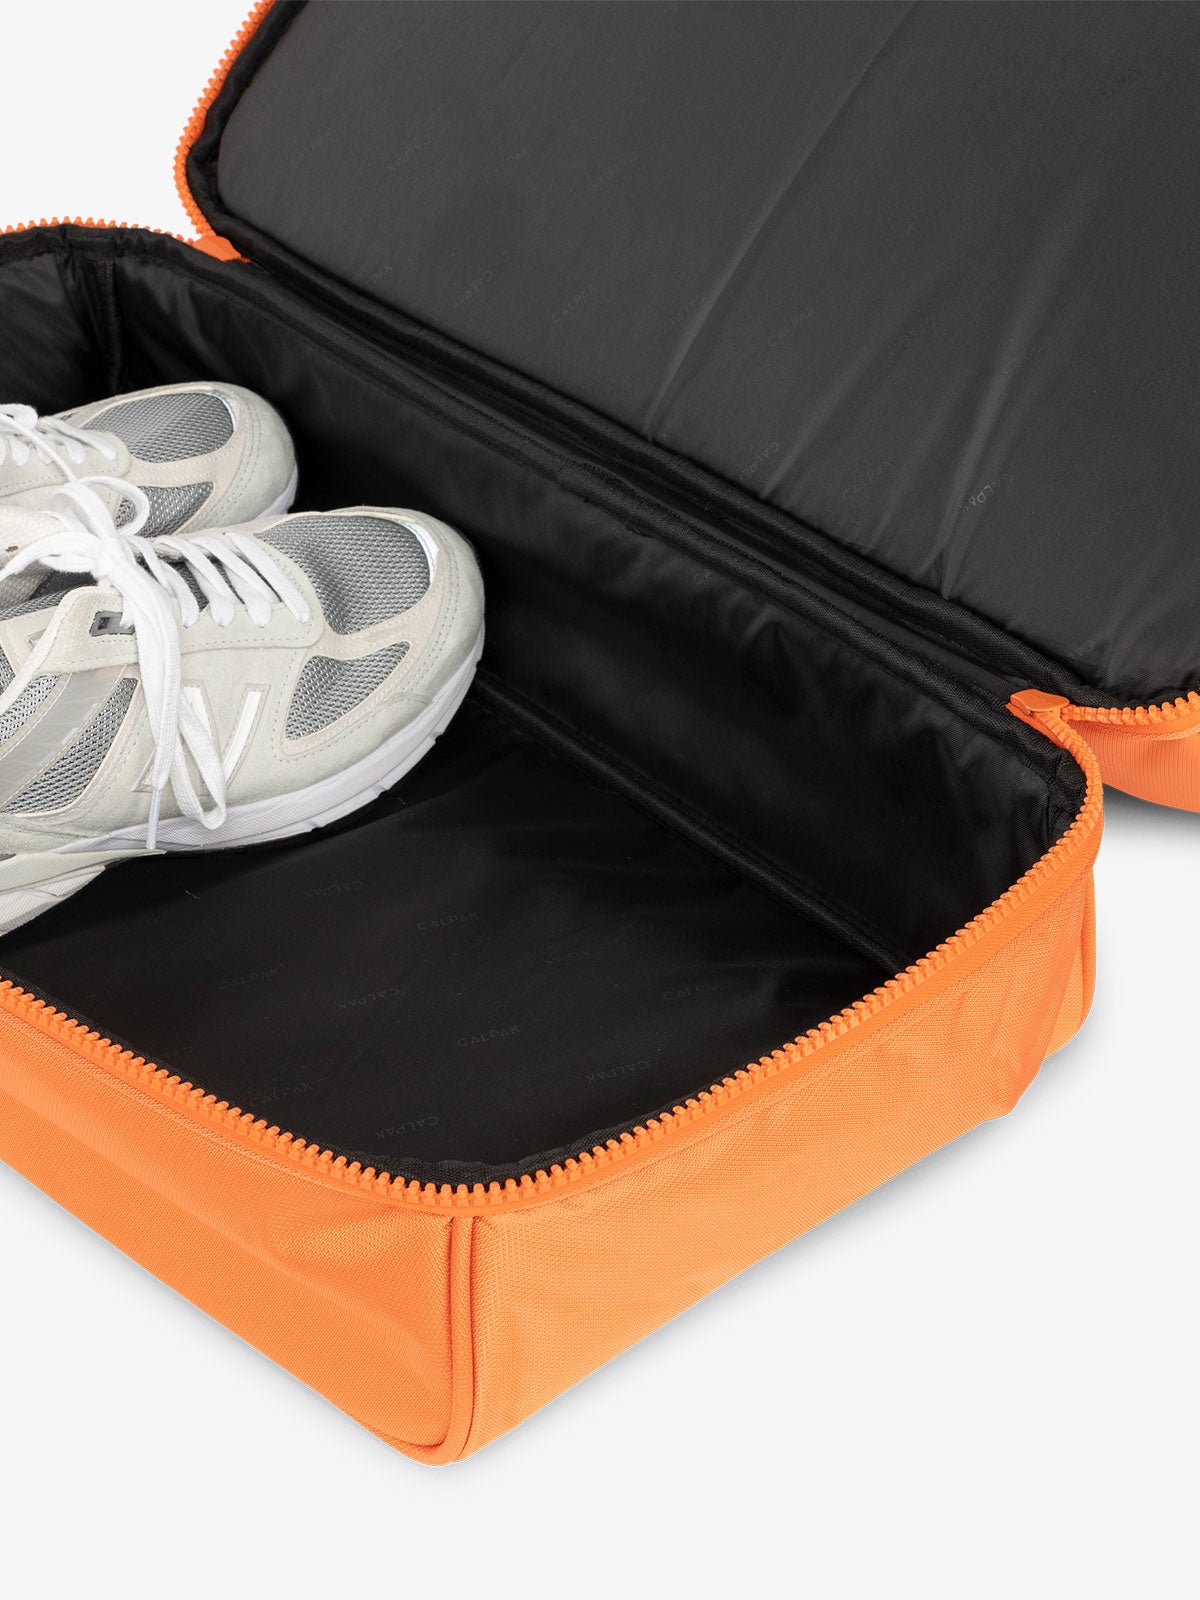 CALPAK Stevyn Duffel bag with bottom shoe compartment for travel in orange